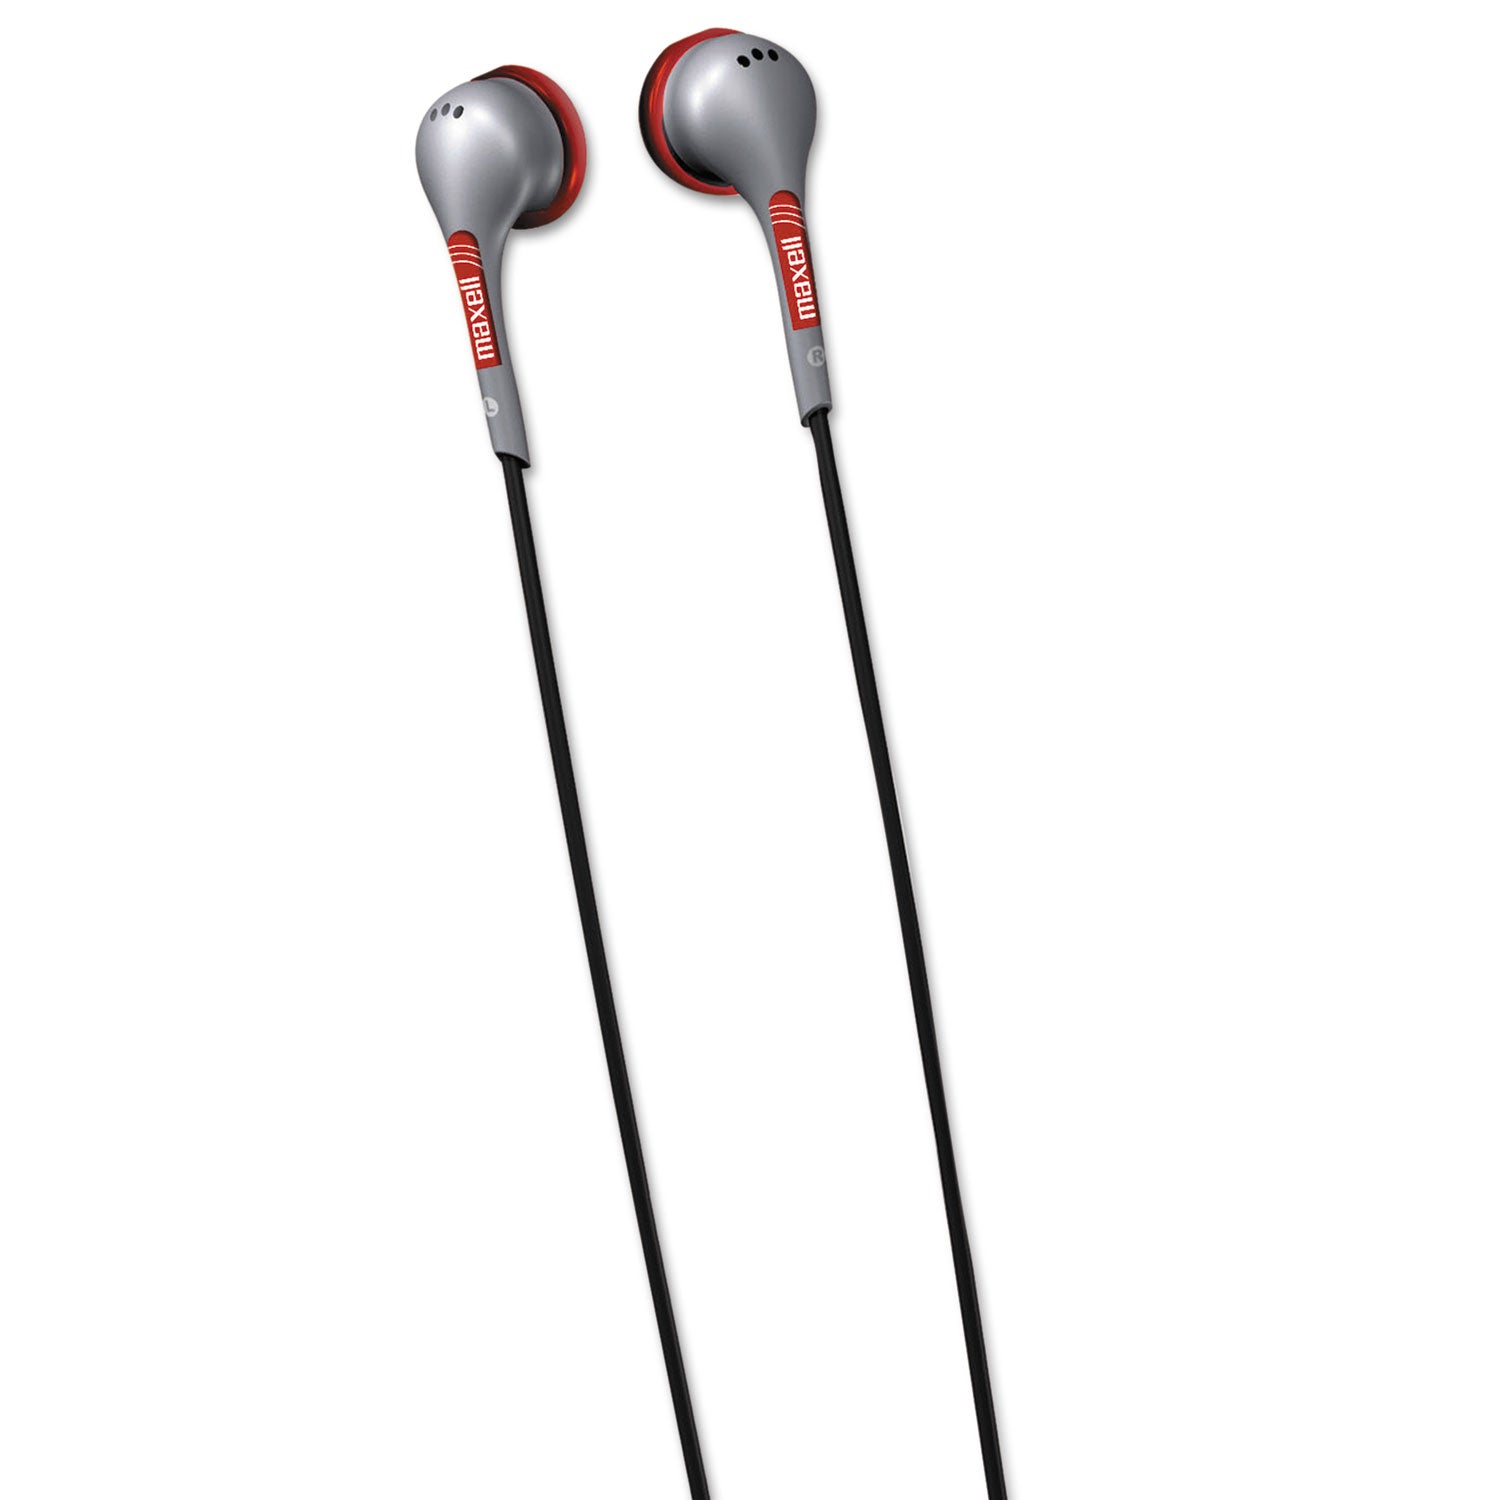 EB125 Digital Stereo Binaural Ear Buds for Portable Music Players, Silver - 